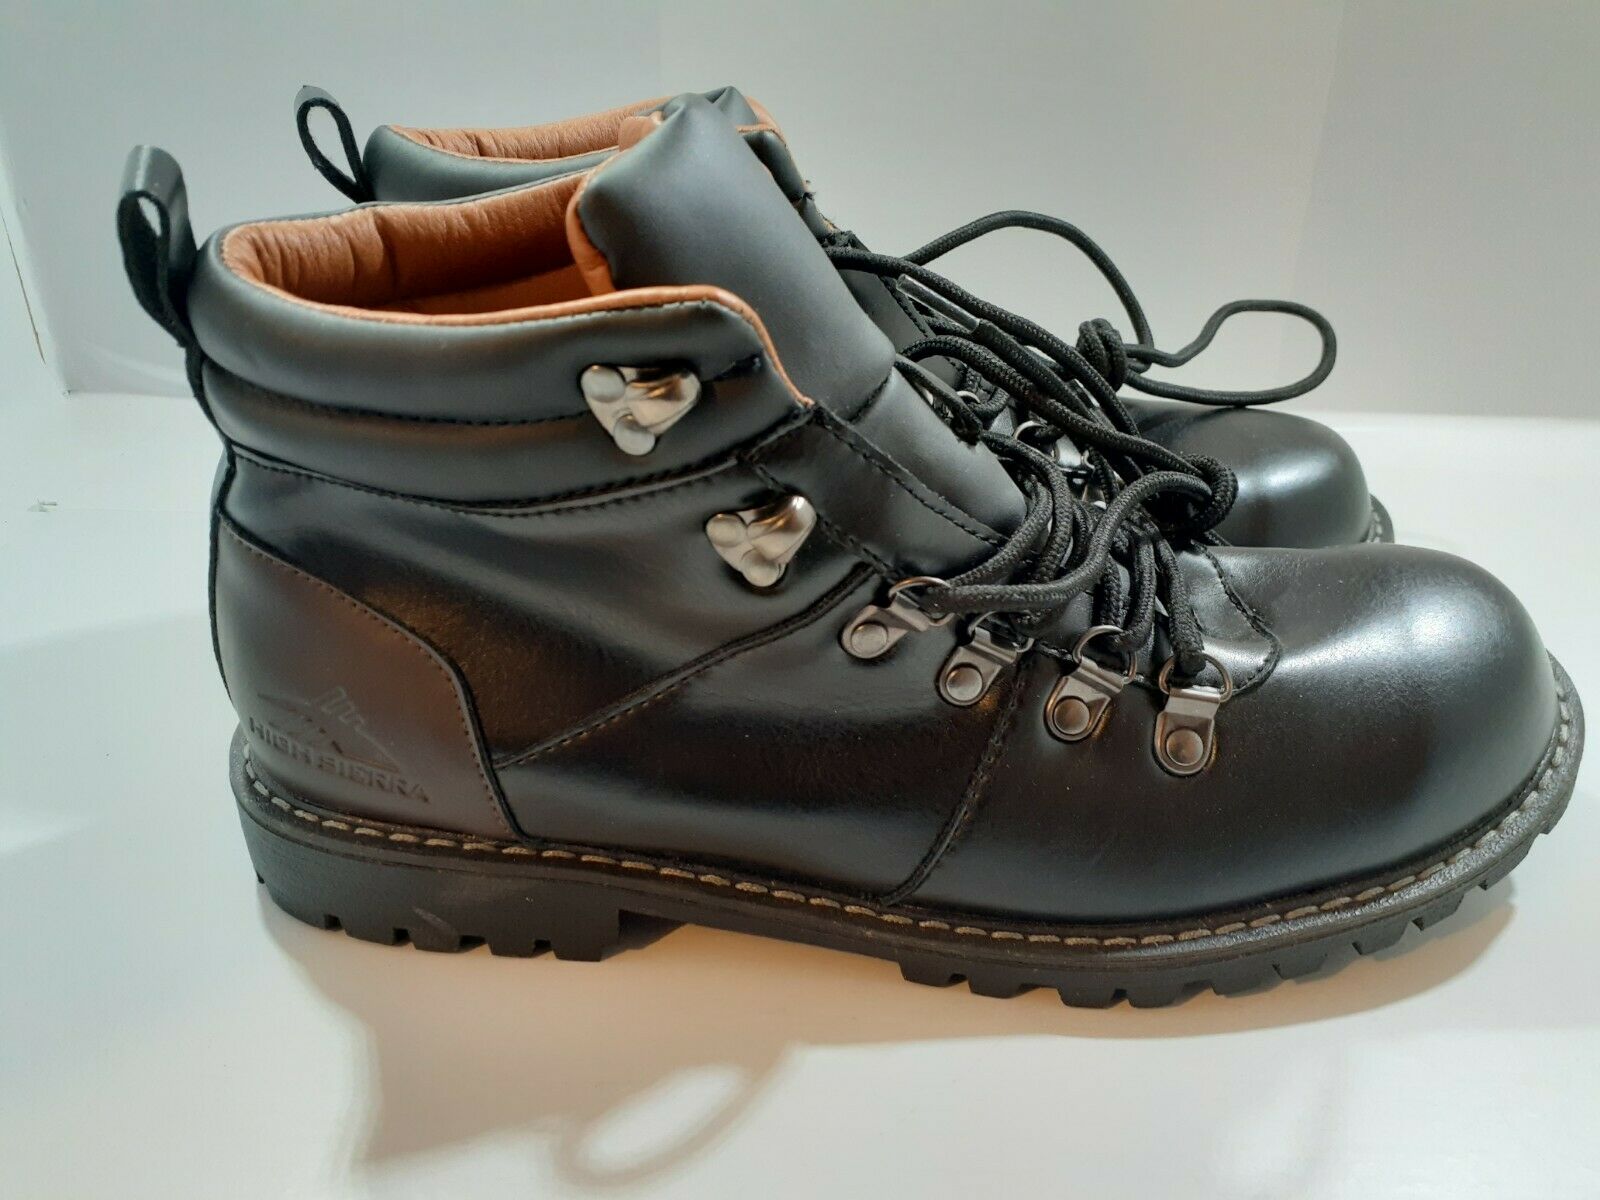 High Sierra "Duke" Men's Black Leather Outdoor Hiking Boots 17818 Size 9.5 M